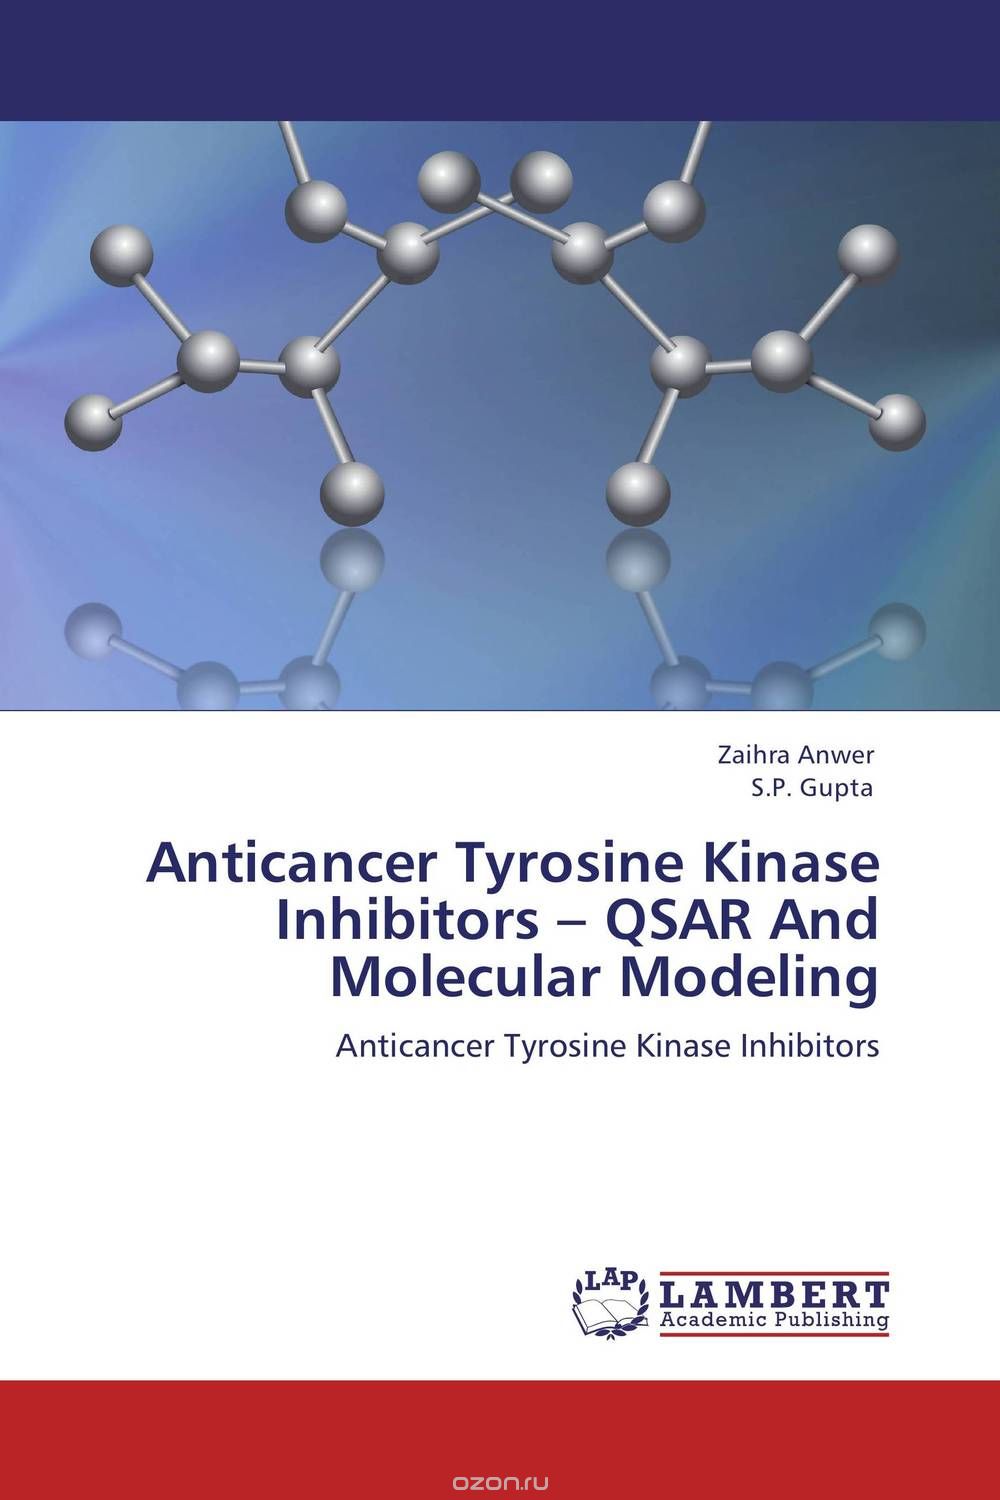 Anticancer Tyrosine Kinase Inhibitors – QSAR And Molecular Modeling